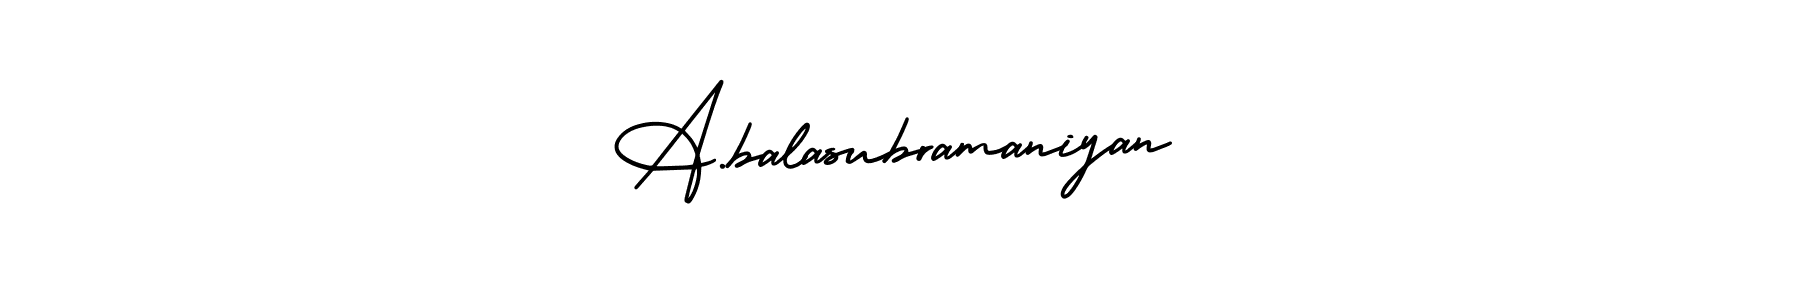 How to Draw A.balasubramaniyan signature style? AmerikaSignatureDemo-Regular is a latest design signature styles for name A.balasubramaniyan. A.balasubramaniyan signature style 3 images and pictures png